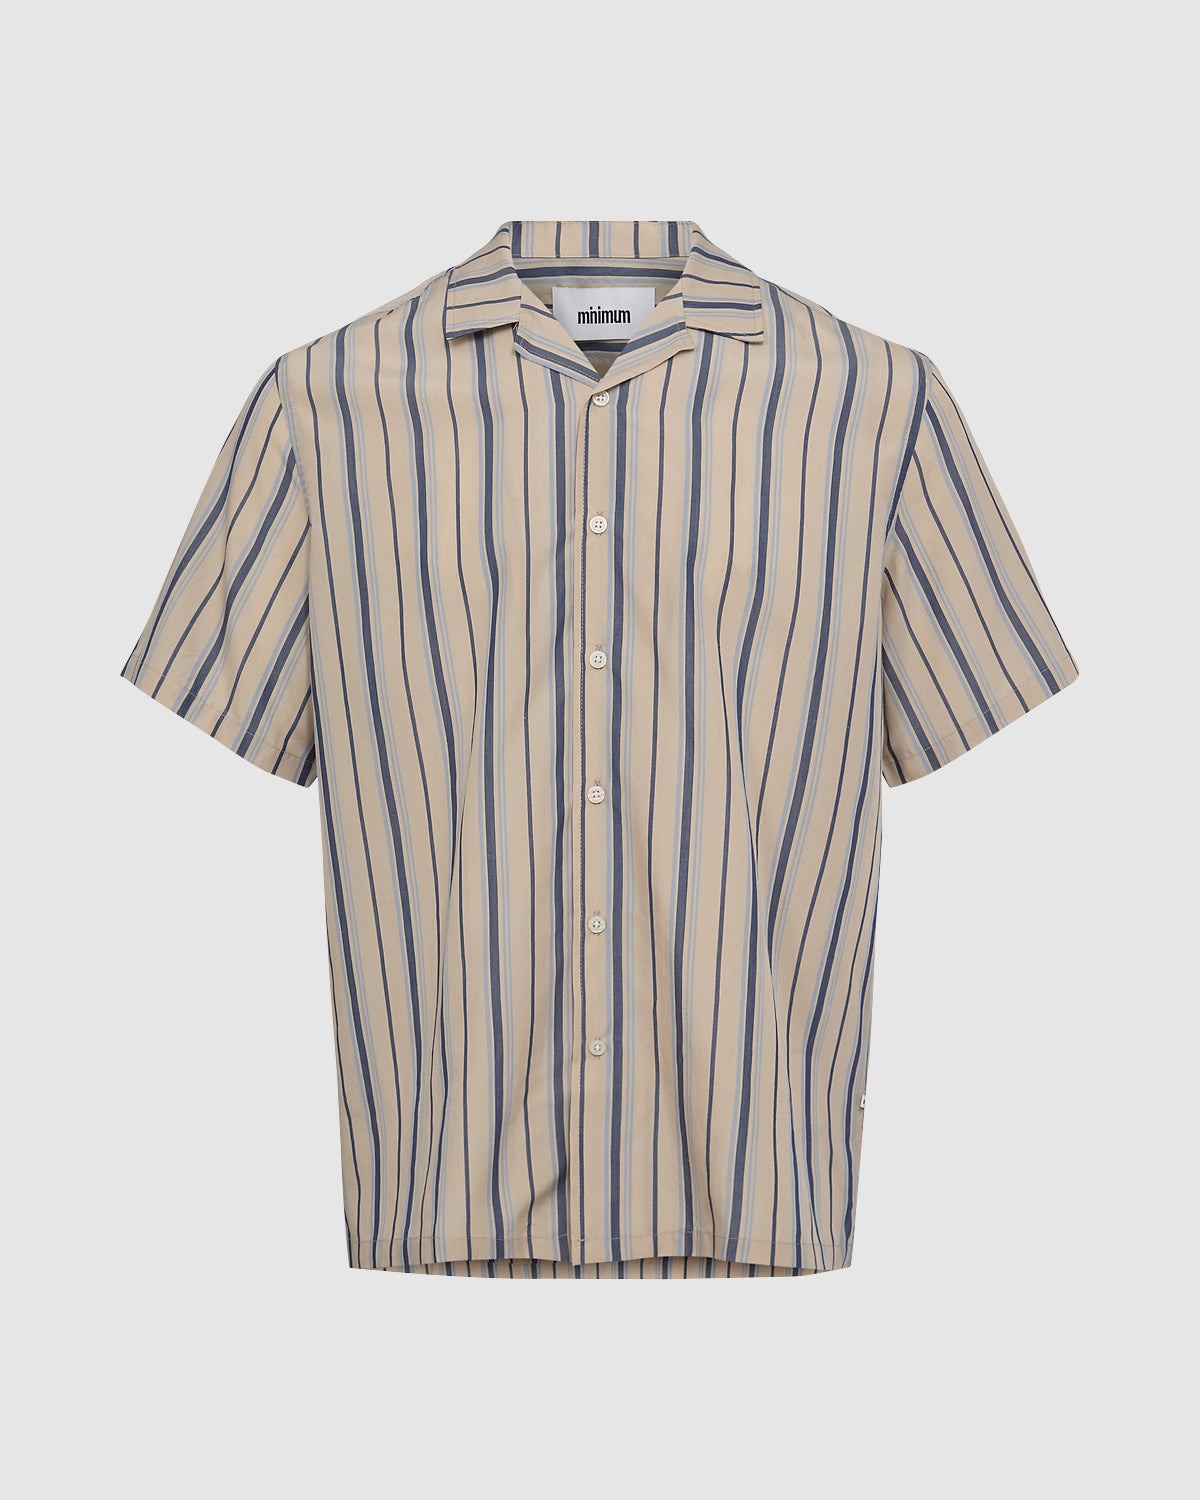 Minimum Men's Striped Jole Shirt in Hydrangea